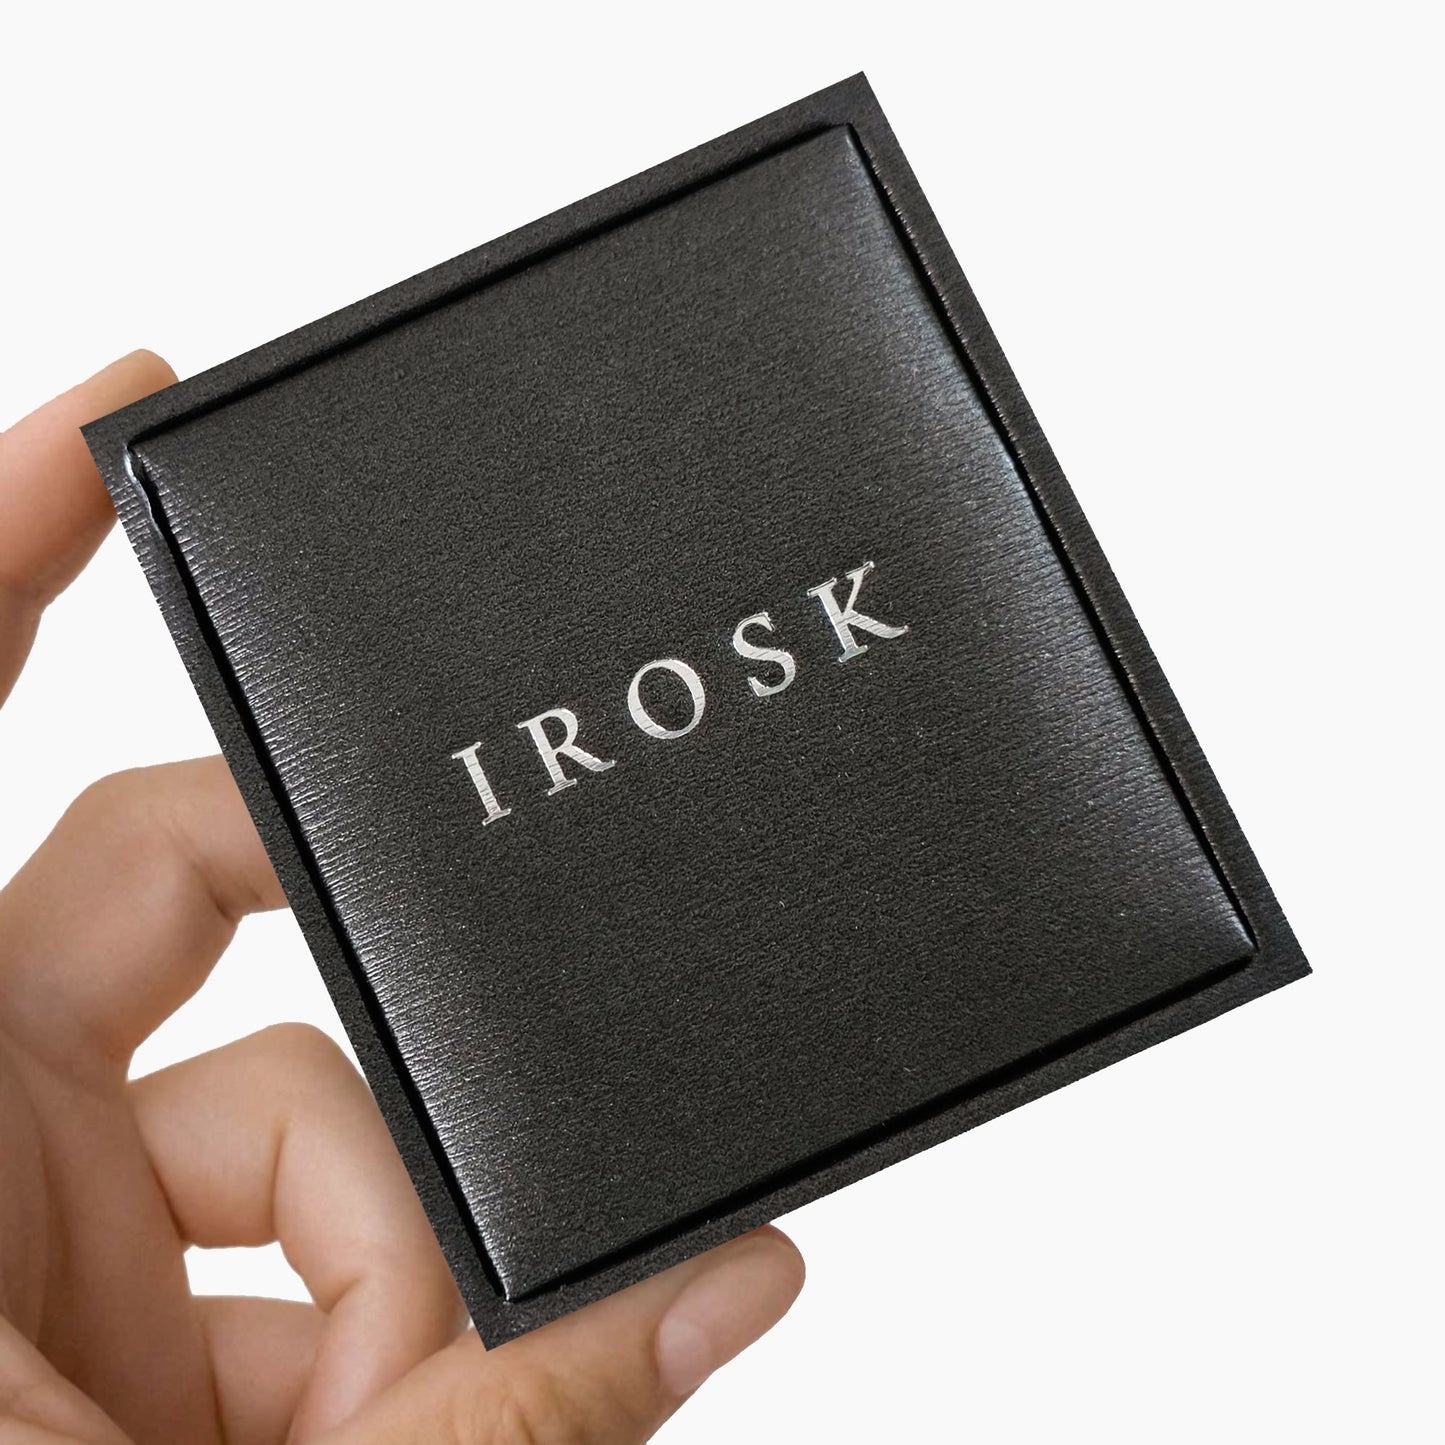 Irosk Ginkgo pendant made in 925 Sterling SIlver